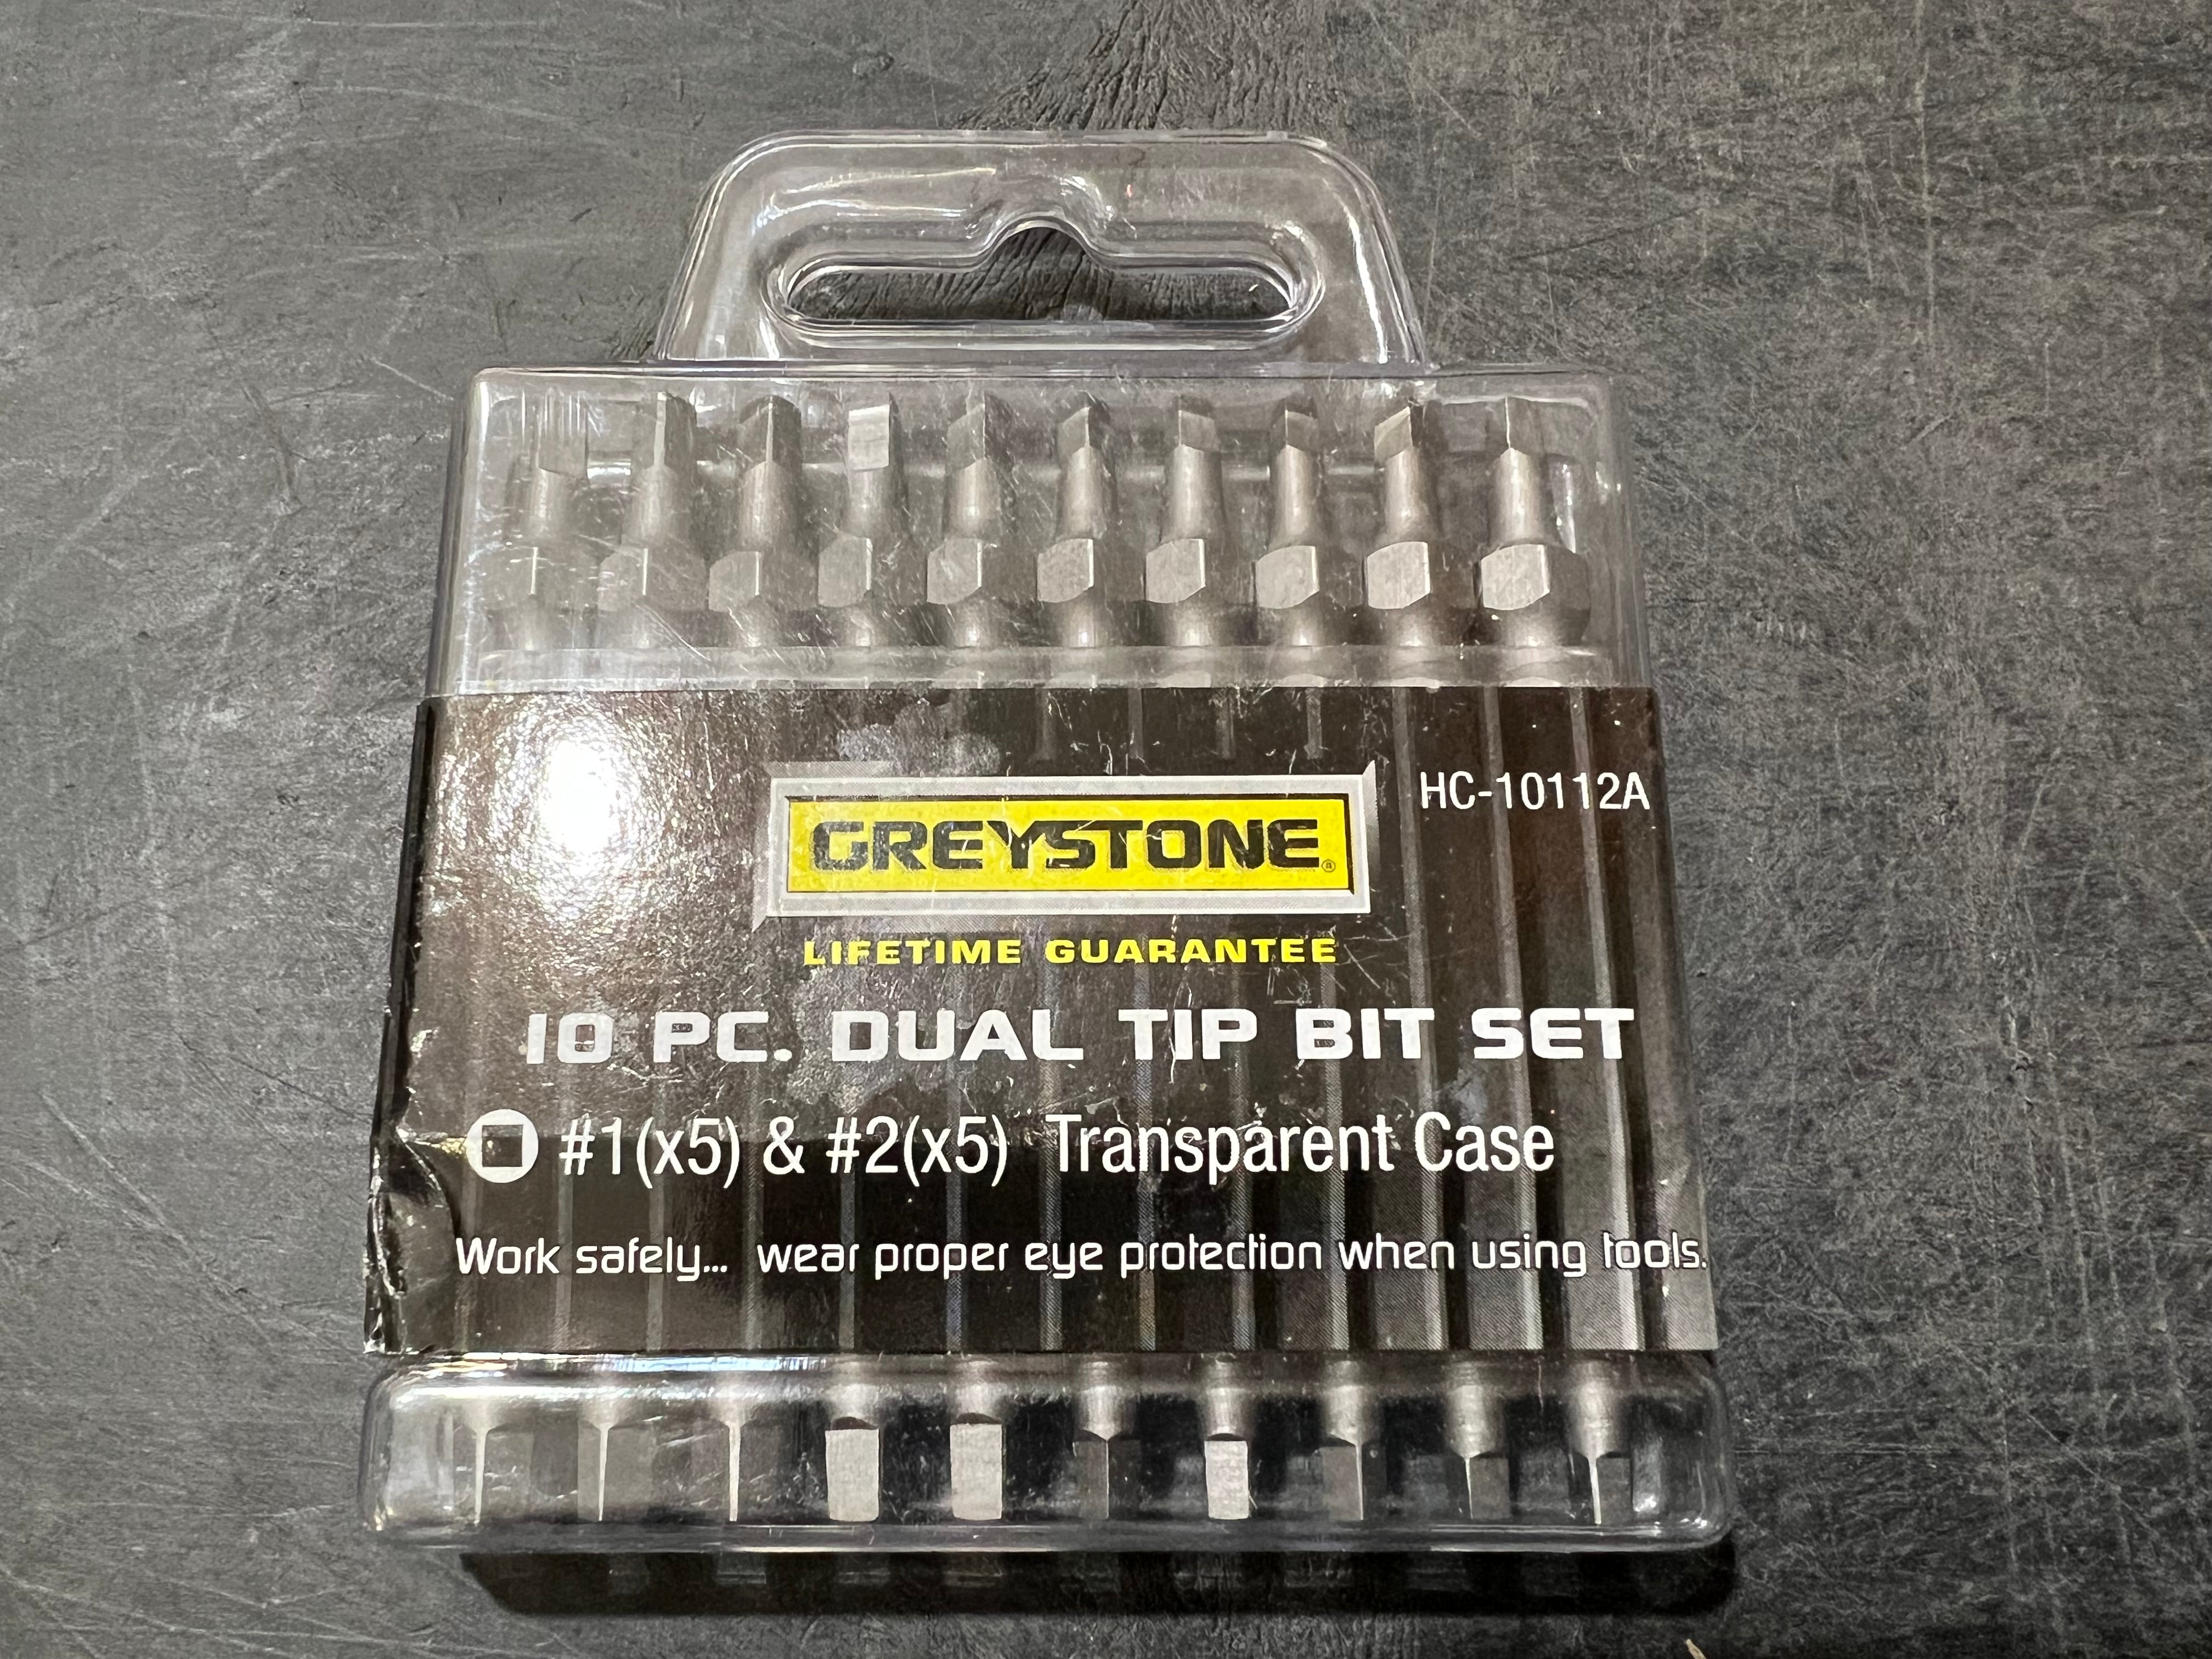 Greystone 10pc. Dual tip Bit Set #1 & #2 HC-10112A